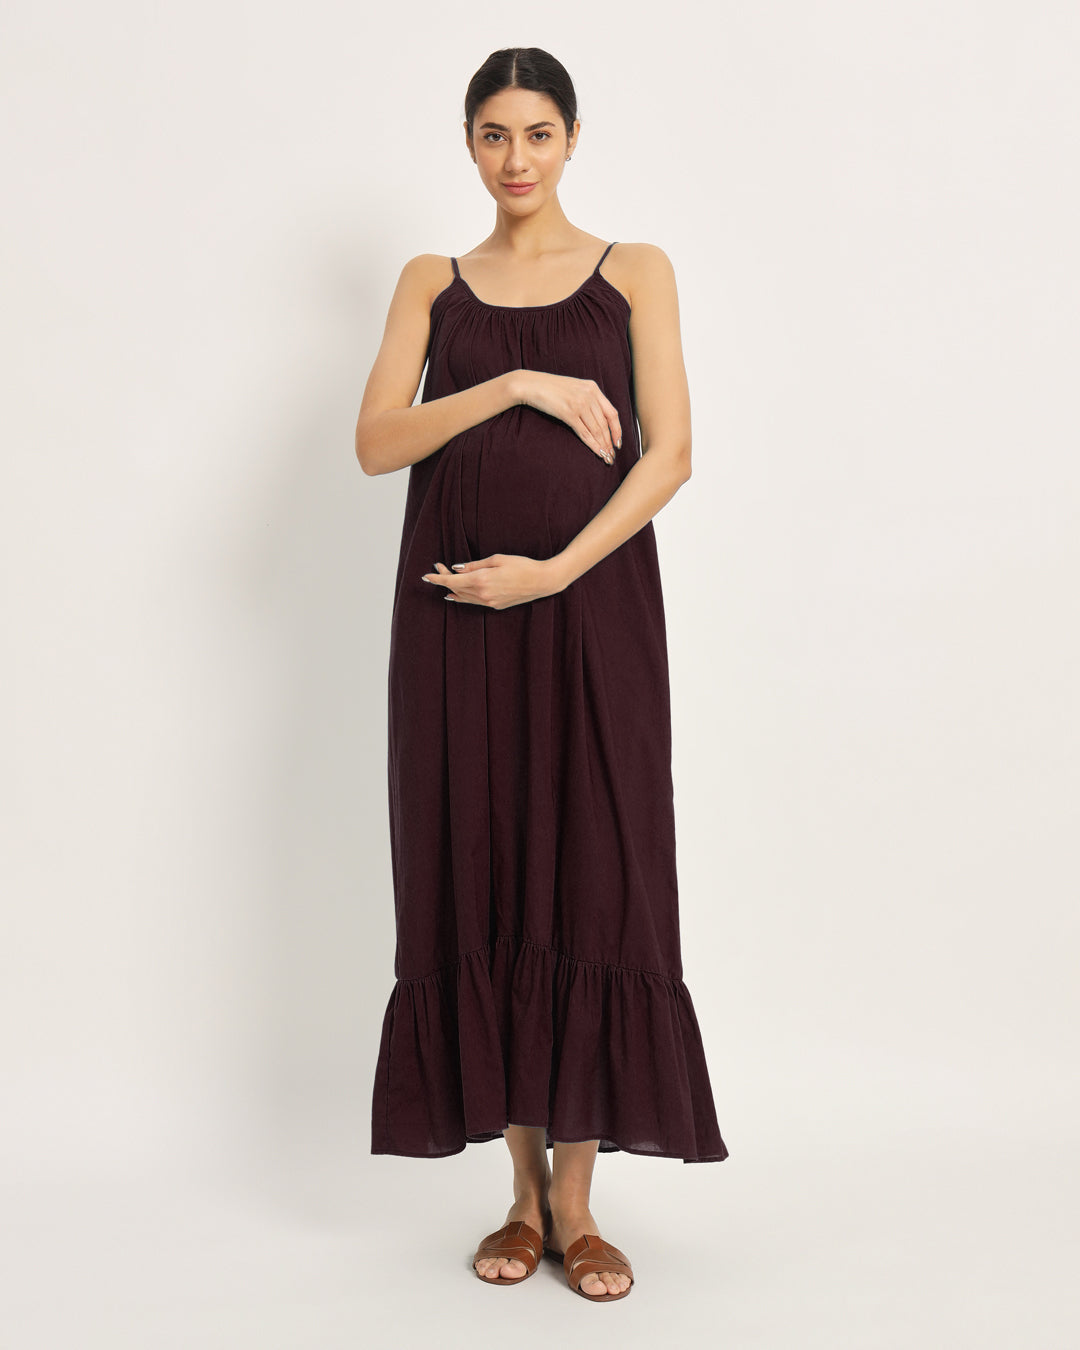 Plum Passion Belly Laugh Maternity & Nursing Dress